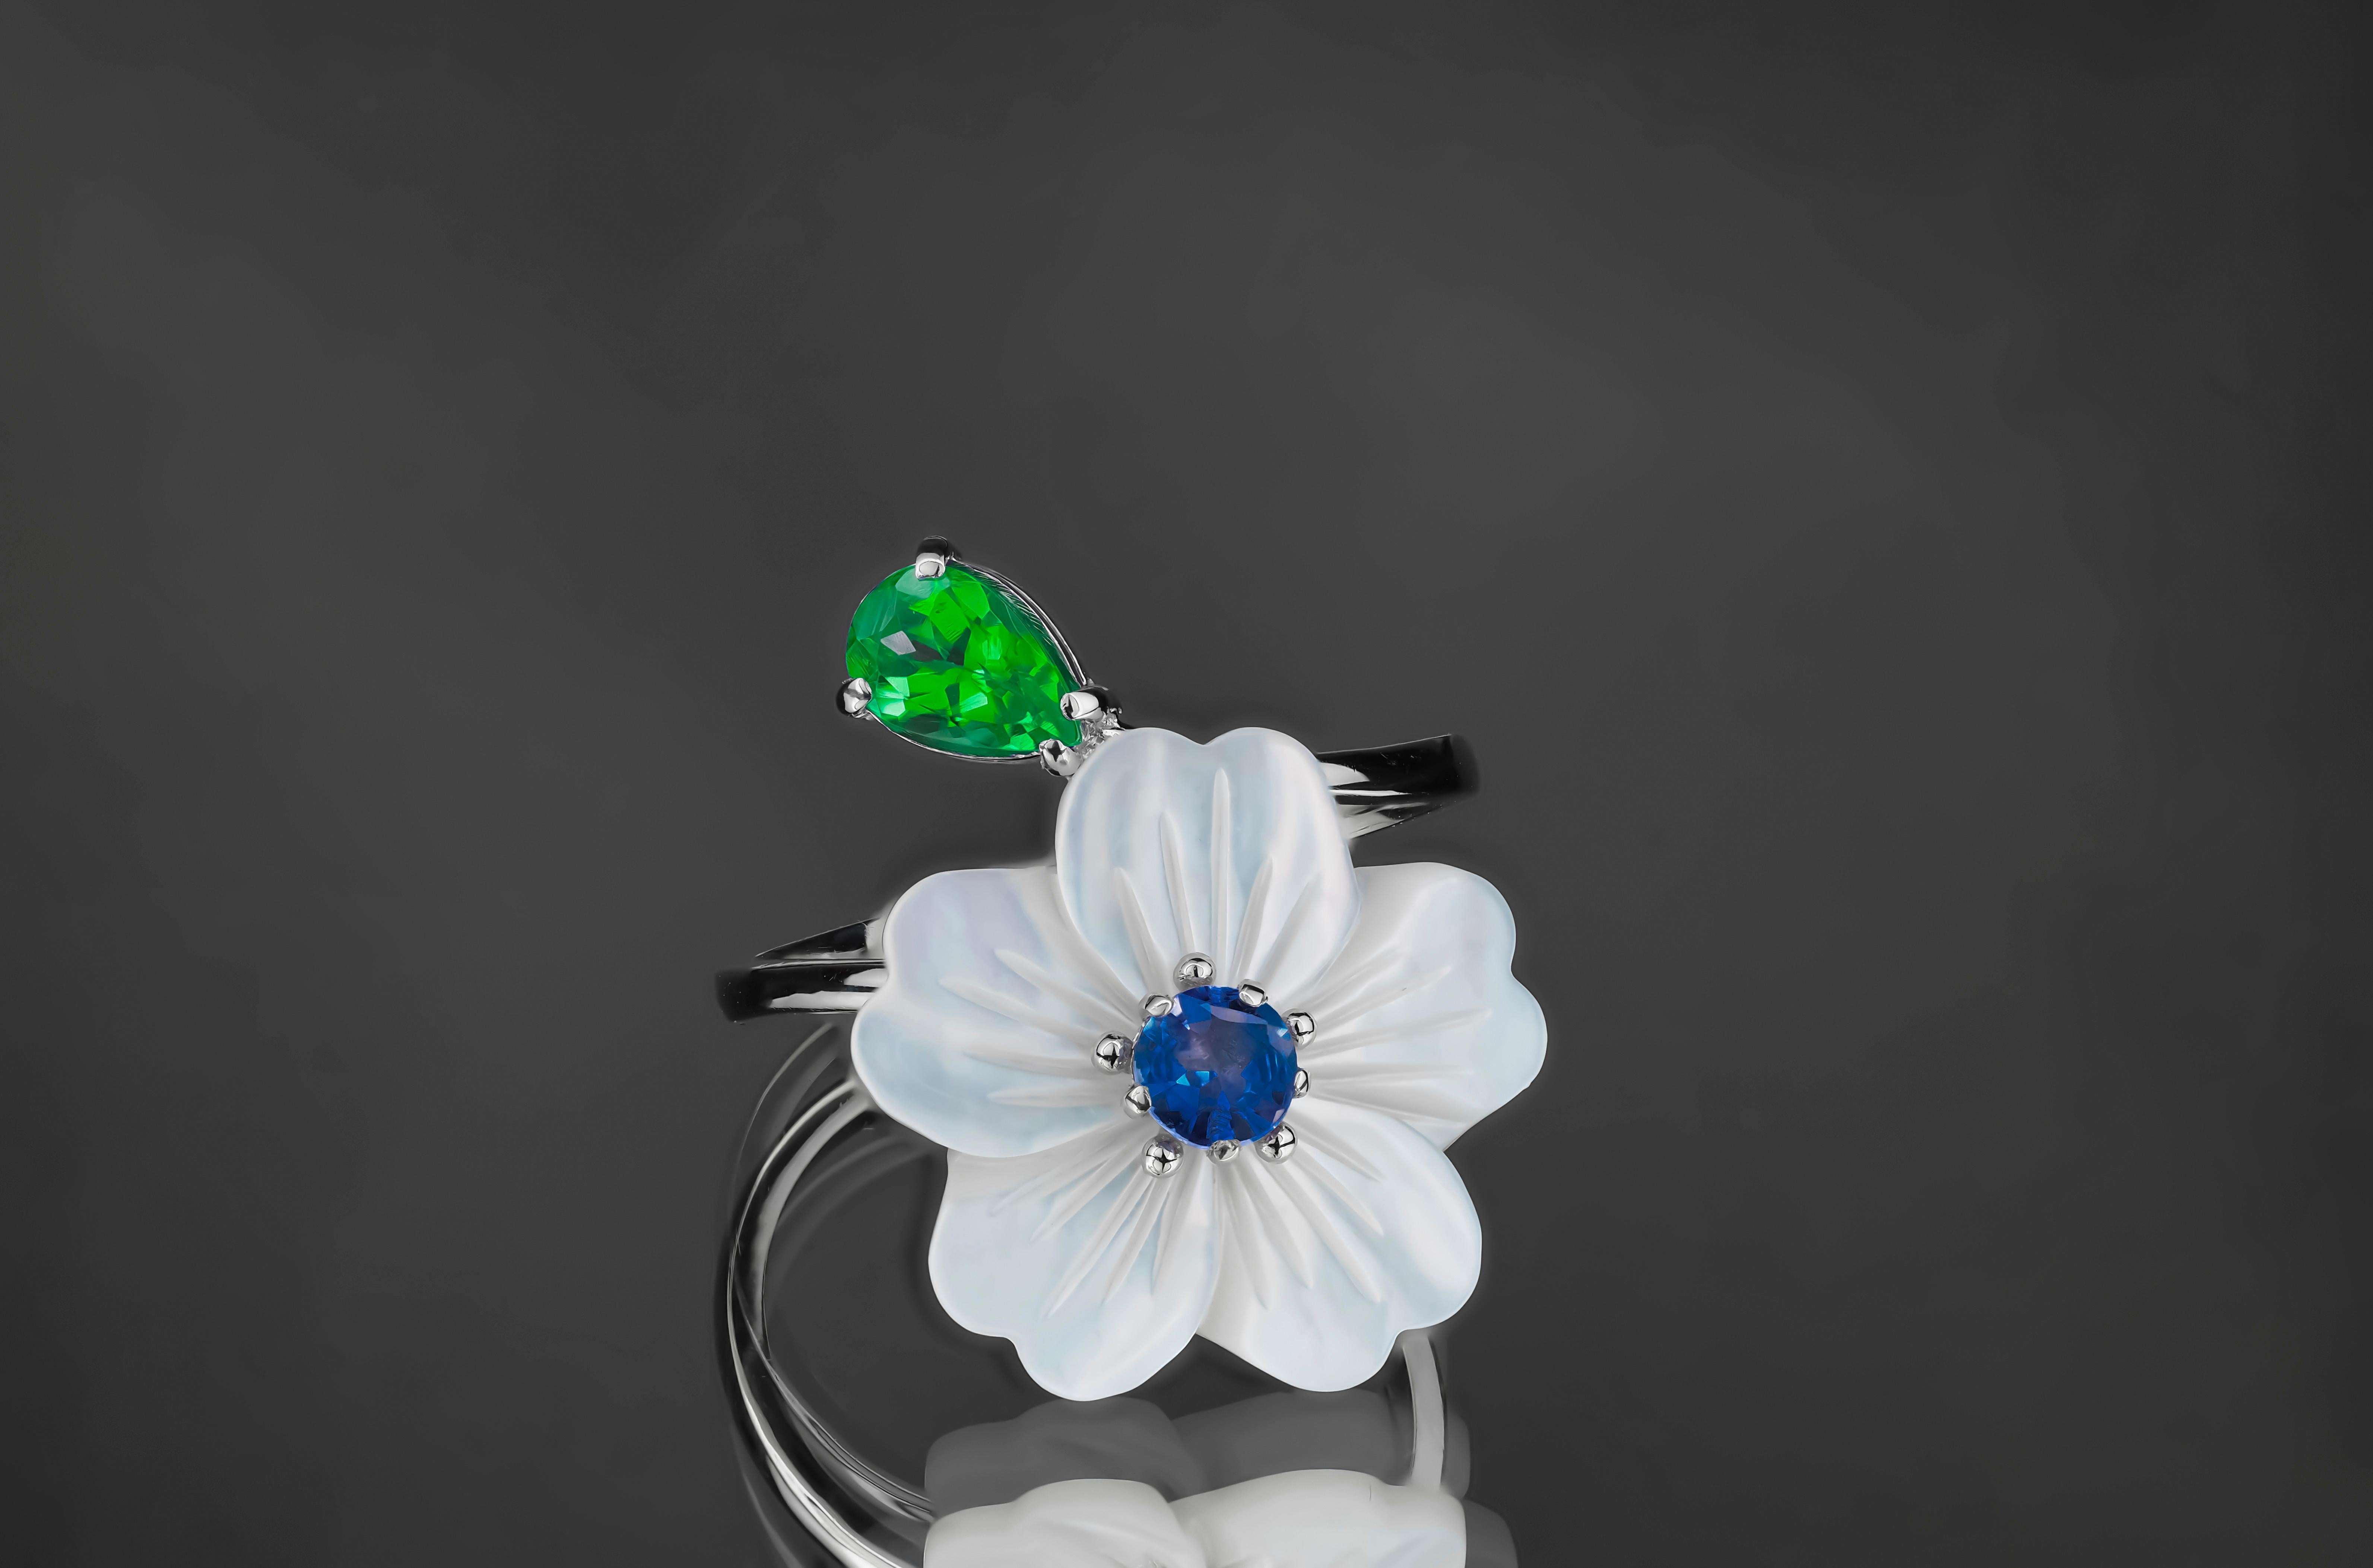 For Sale:  Carved Flower 14k ring with gemstones. 3